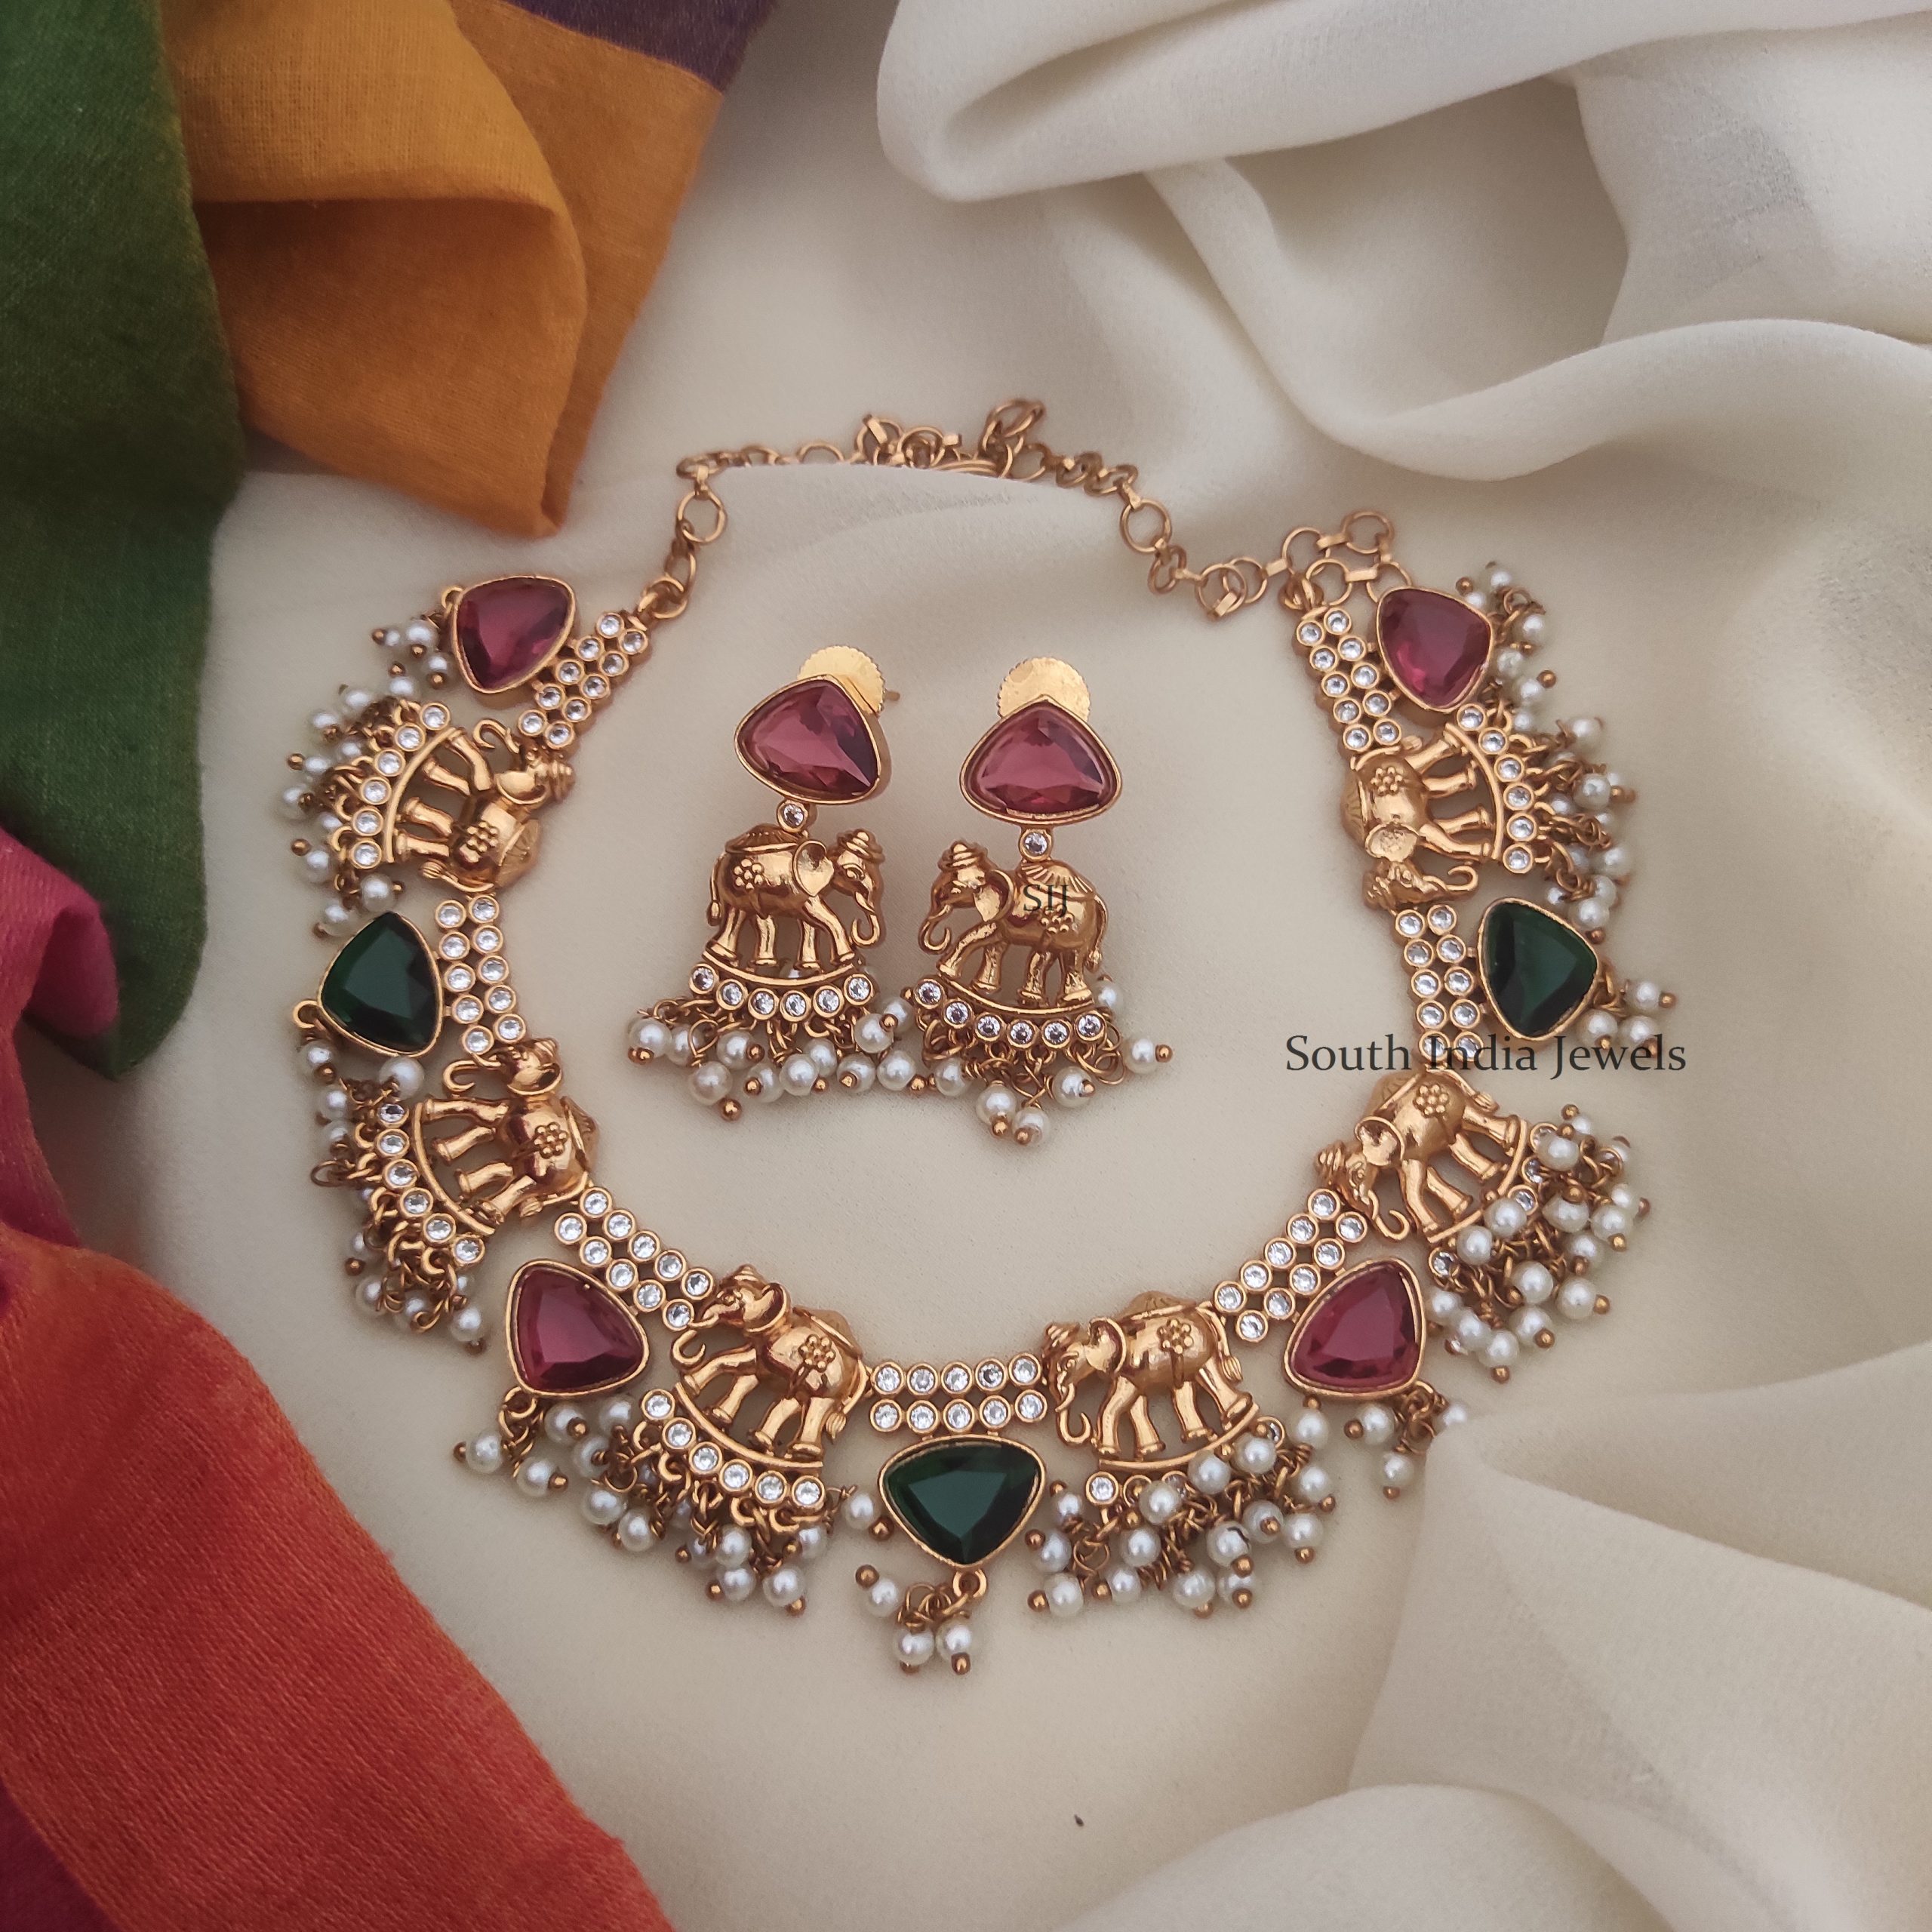 Elephant Design Necklace - South India Jewels